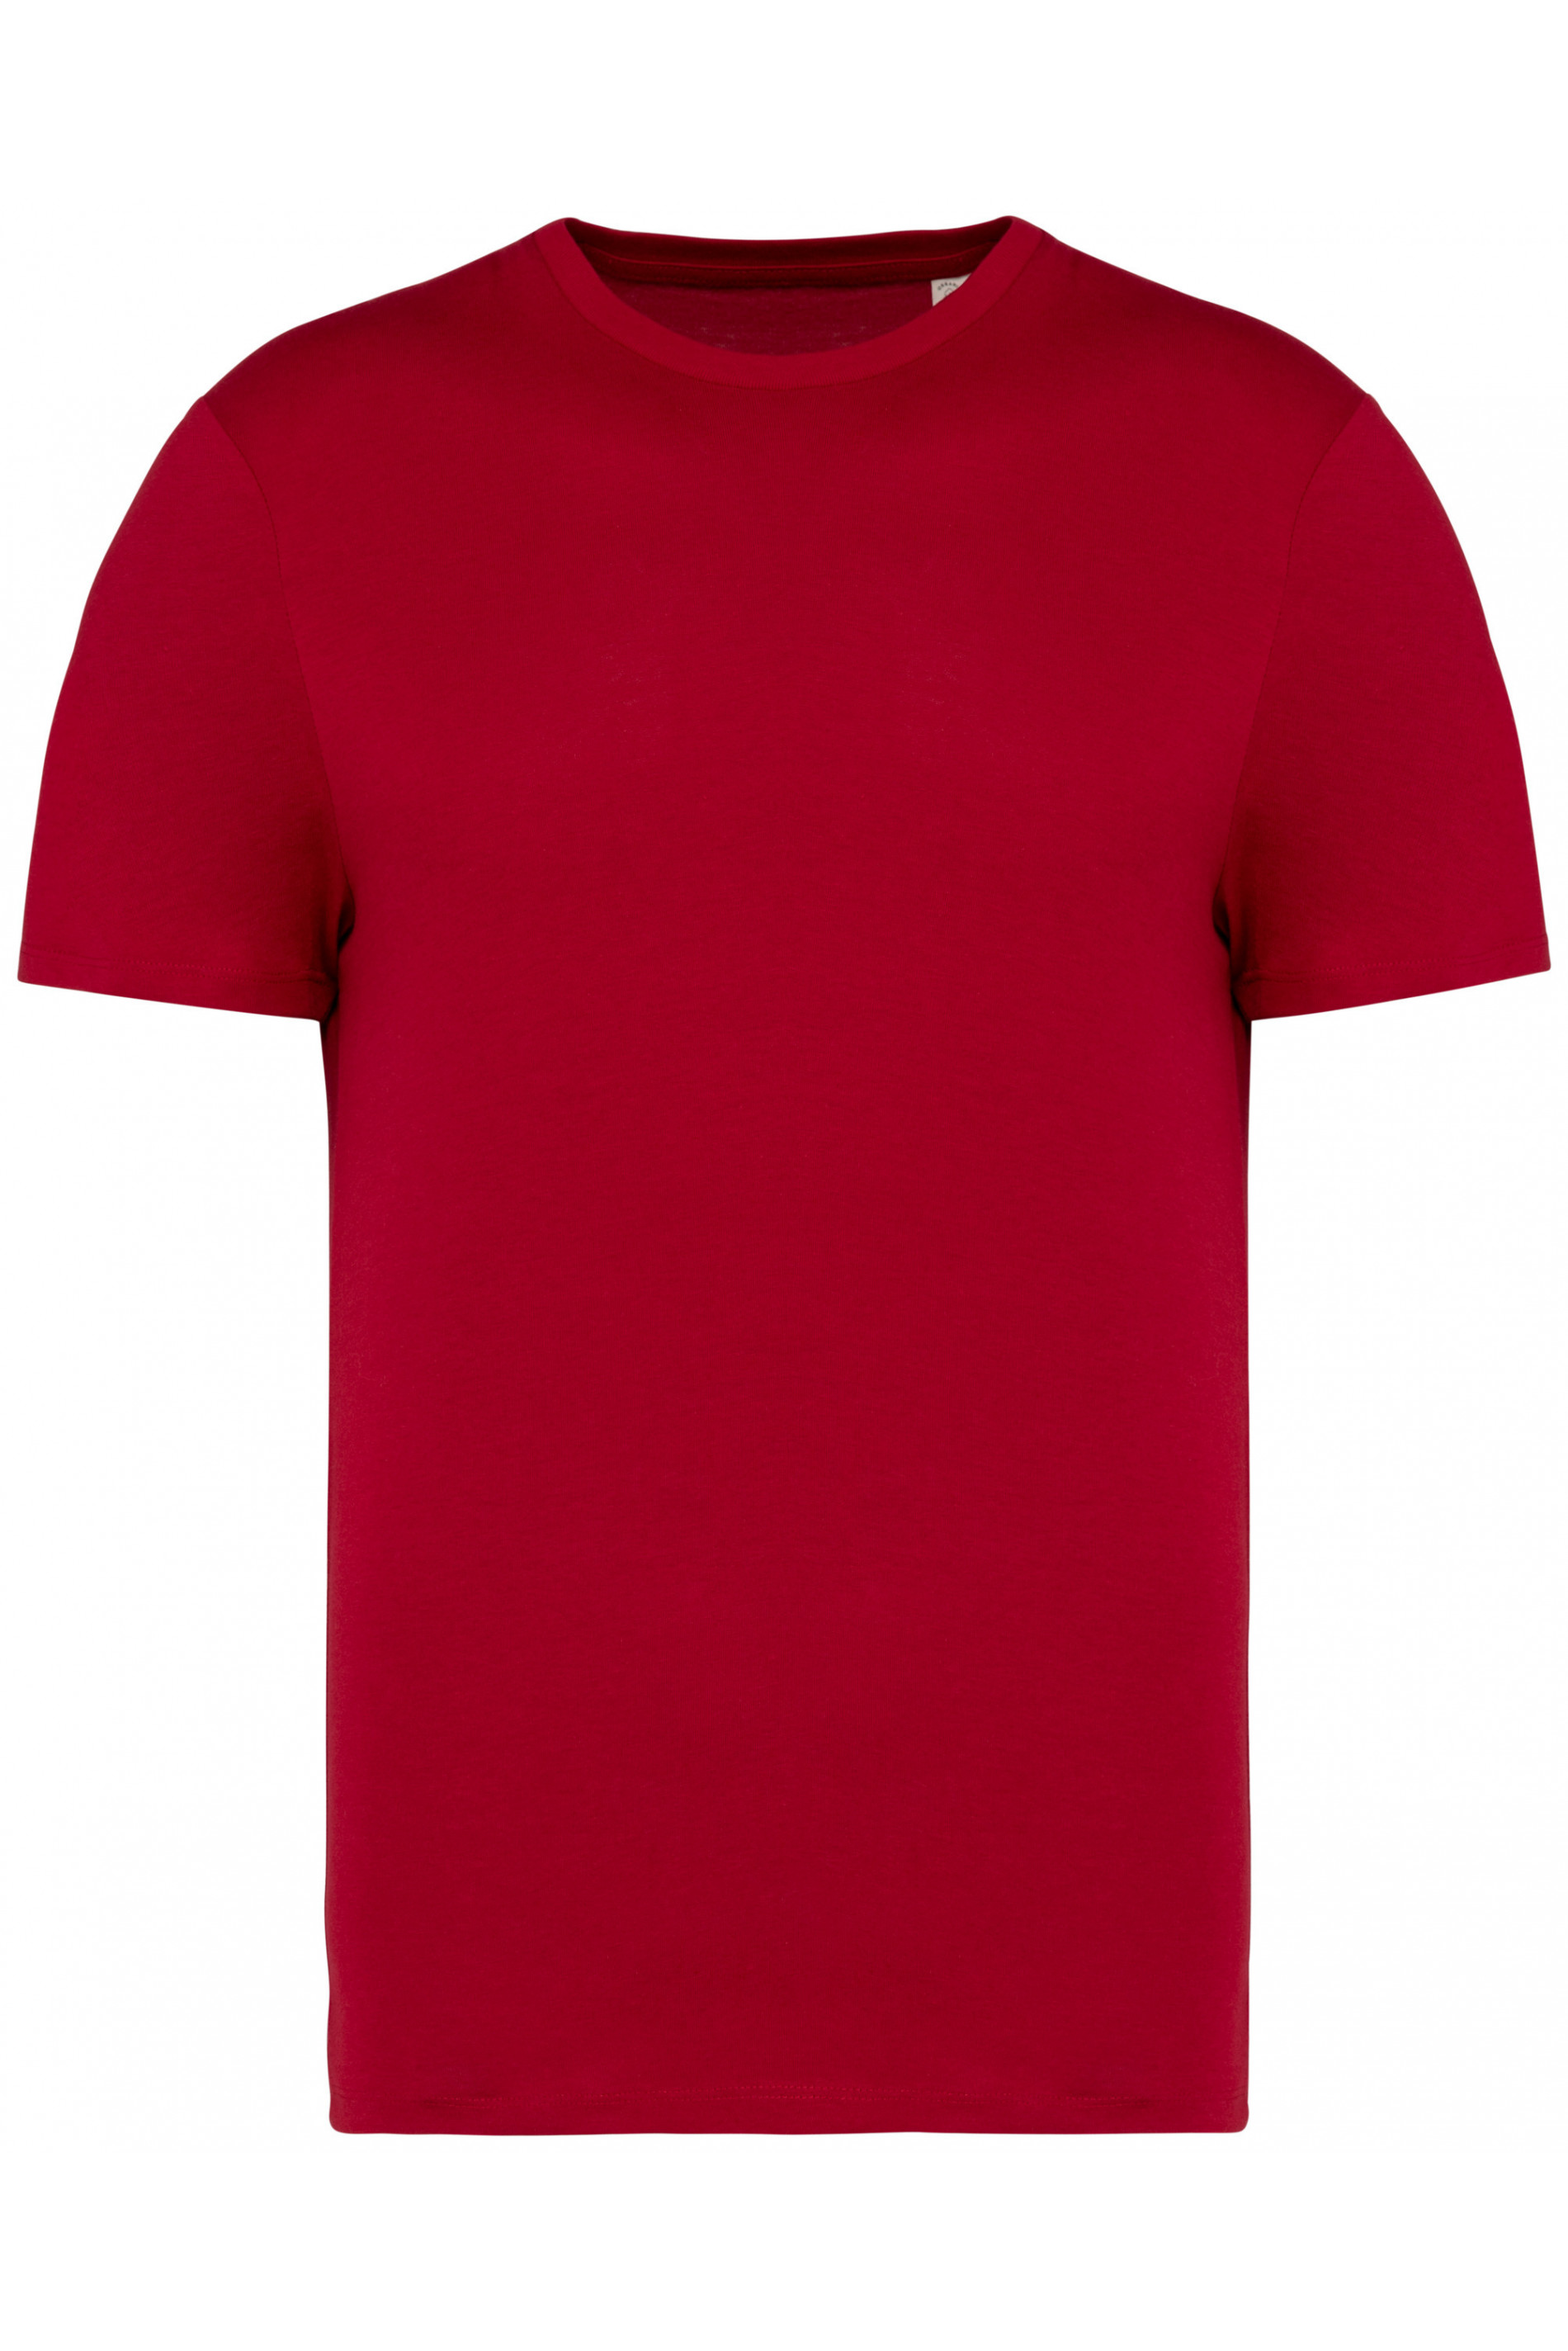 Unisex organic cotton T-shirt 180 g/m² cotton ART® Hibiscus Red M